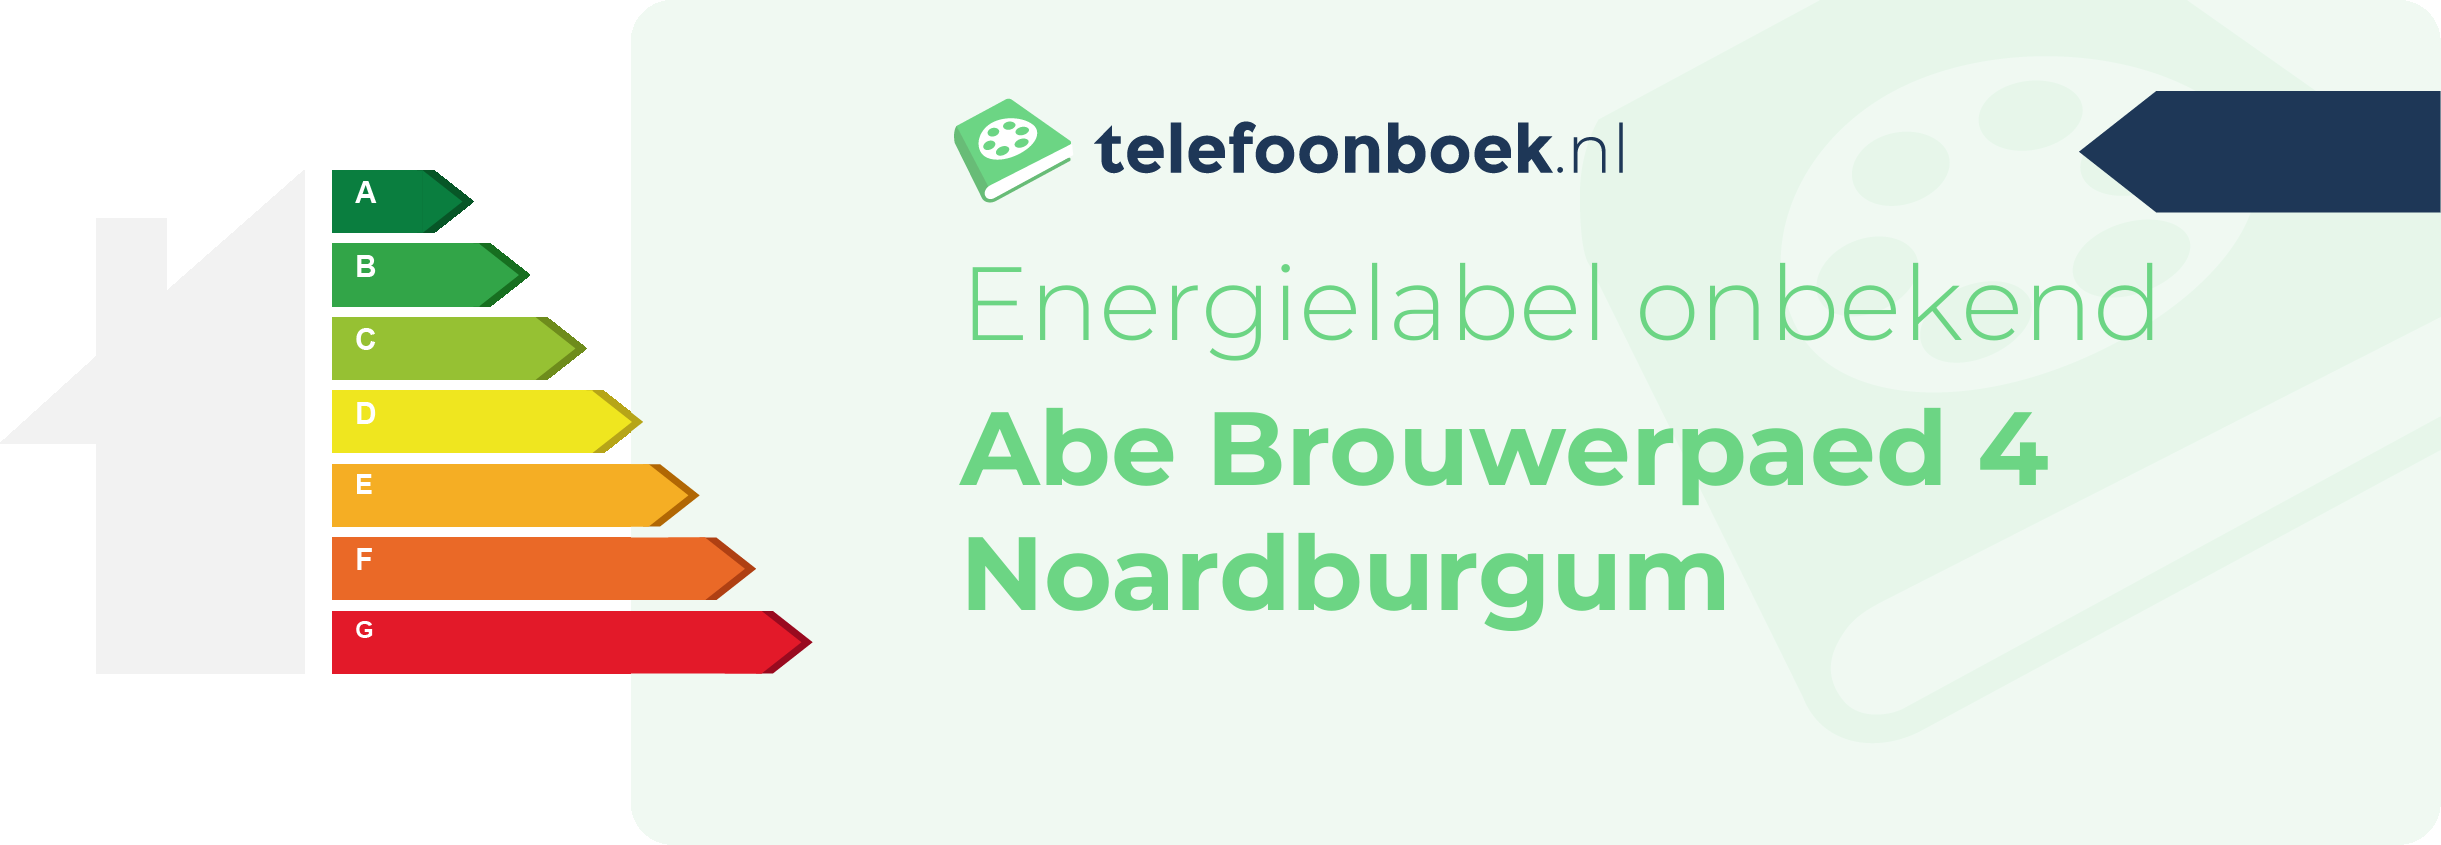 Energielabel Abe Brouwerpaed 4 Noardburgum